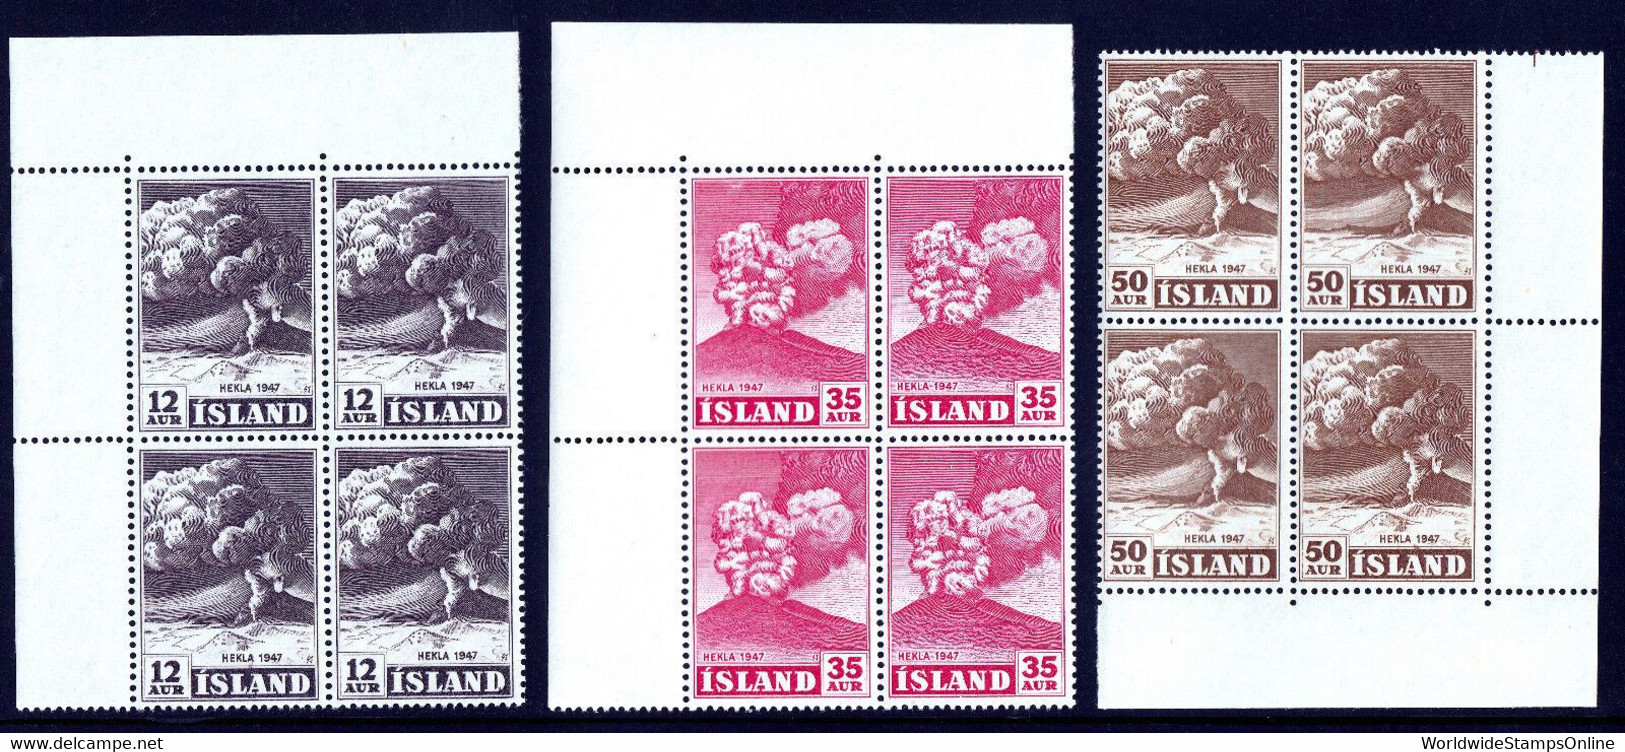 ICELAND — SCOTT 246-252 — 1948 HEKLA ERUPTION SET — MNH BLOCKS/4 — 2 SCANS — SCV $397 - Unused Stamps